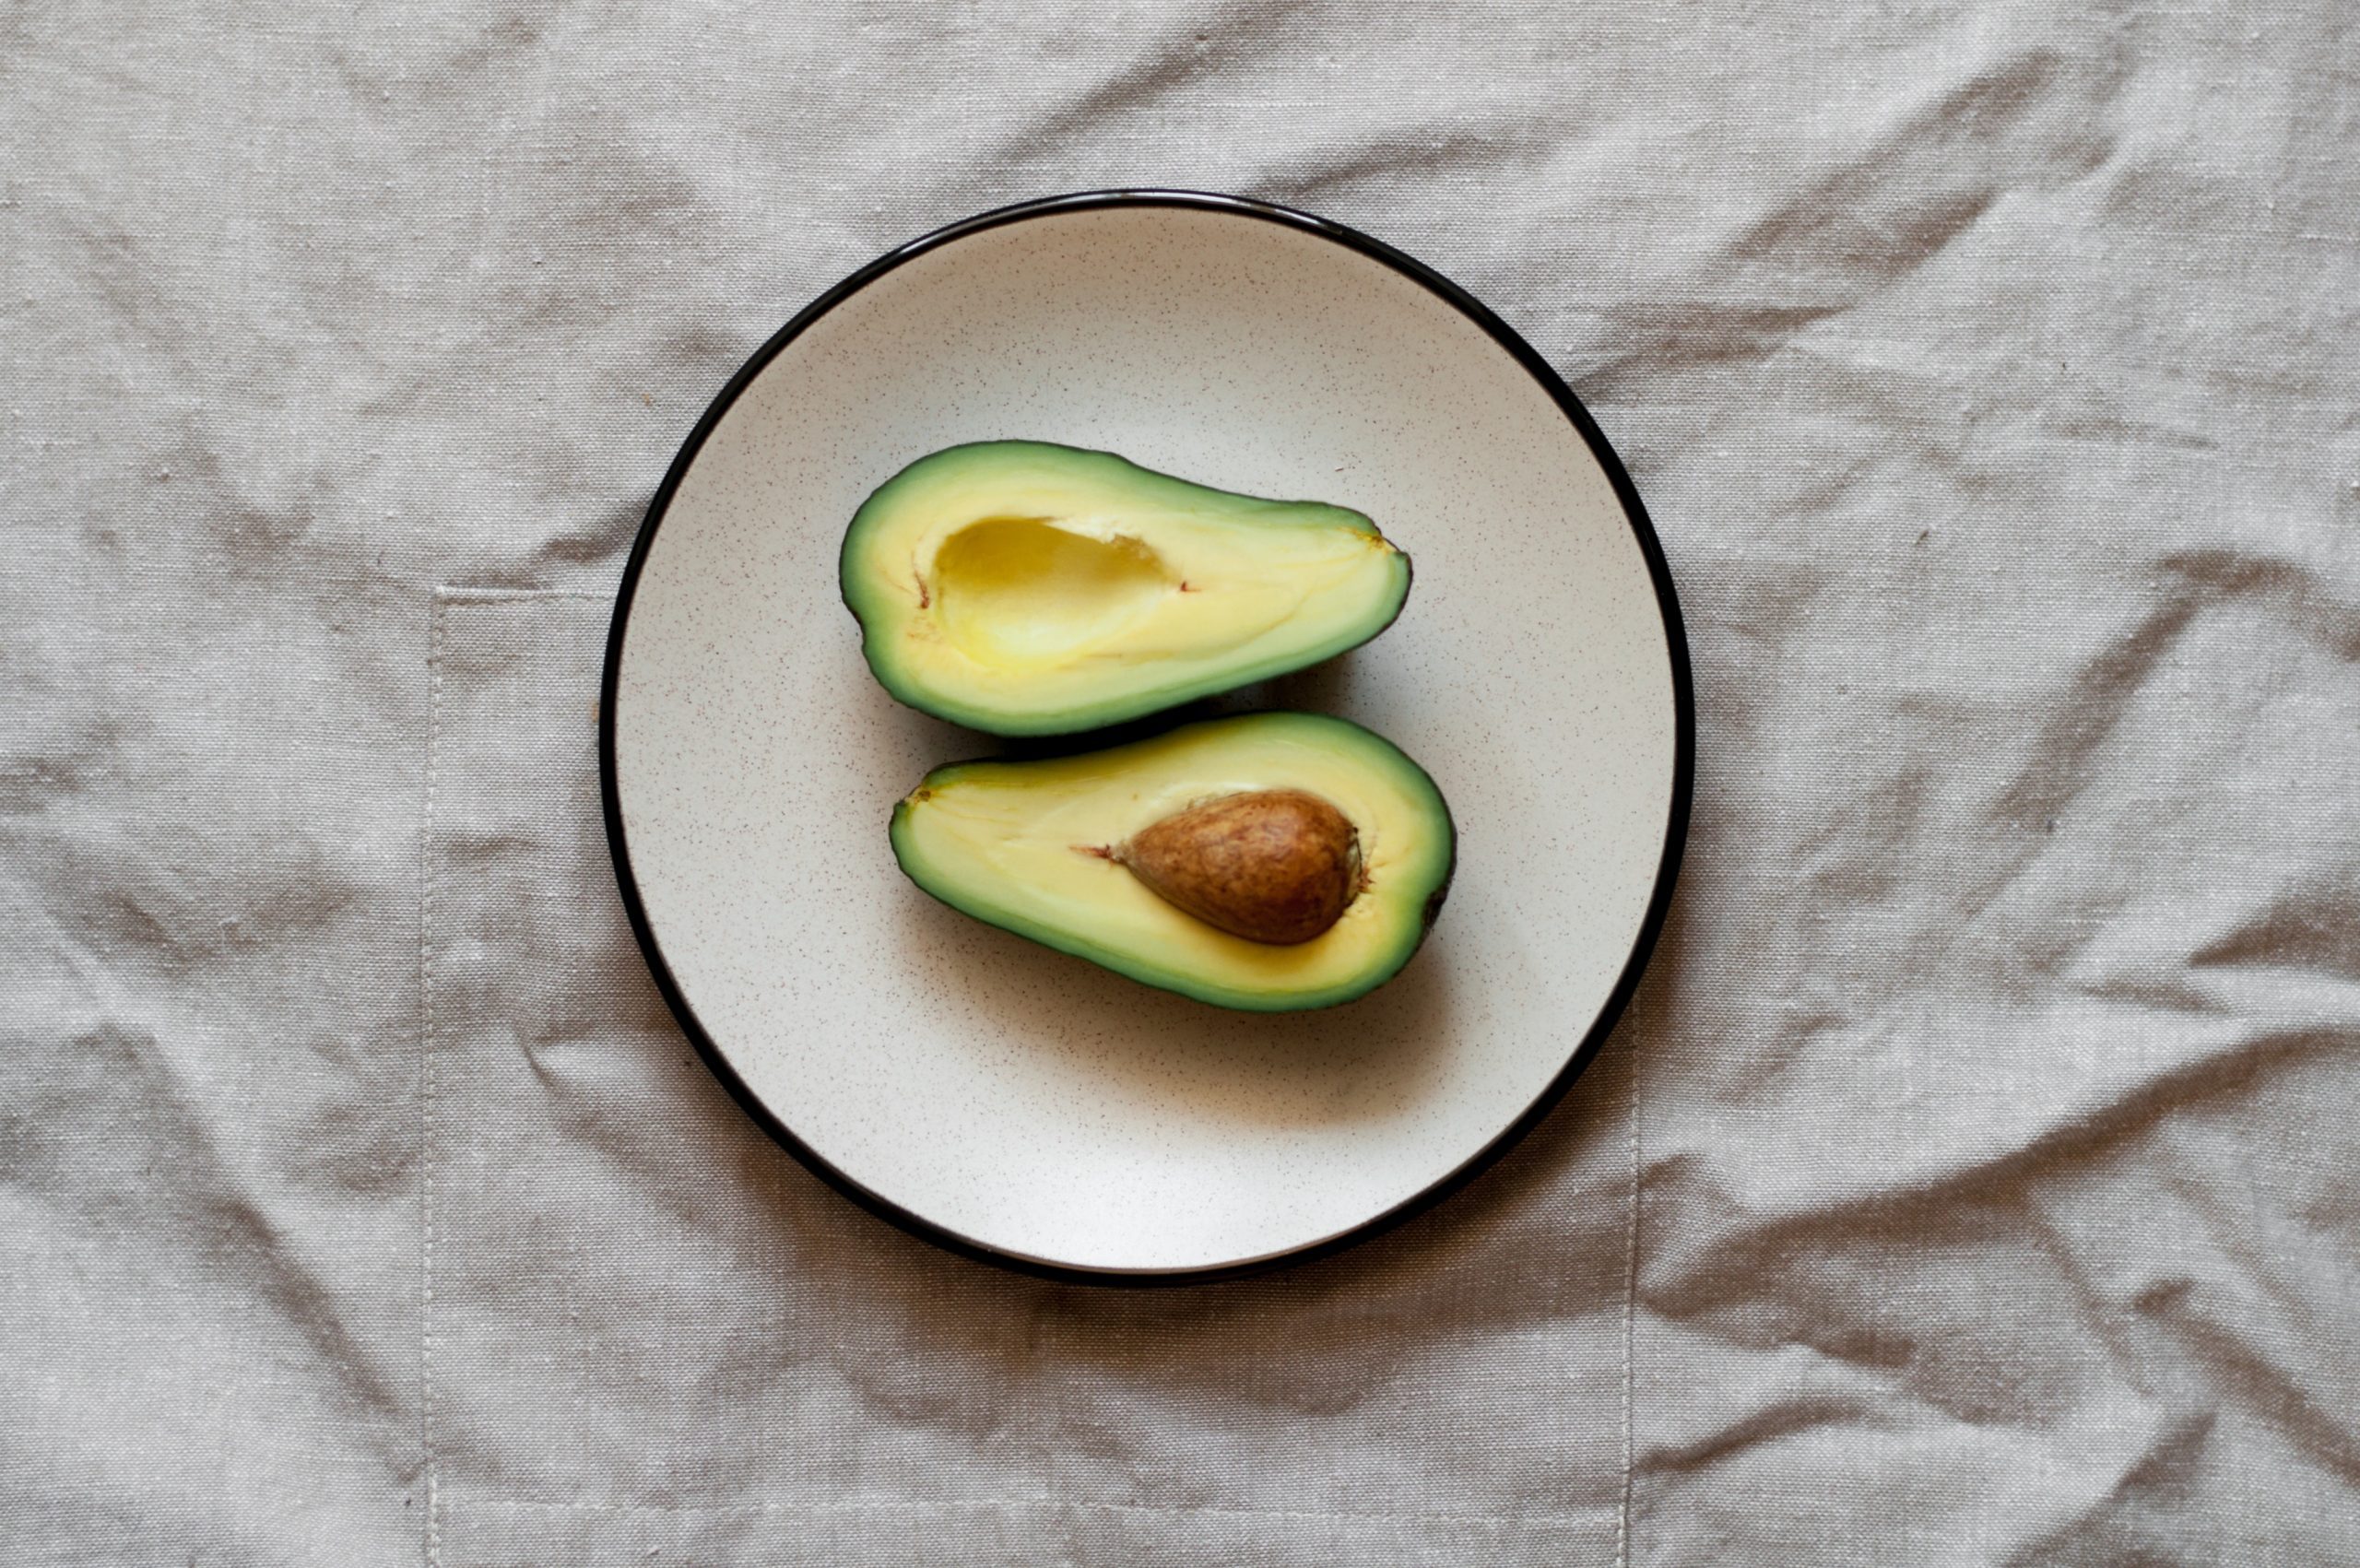 Food for healthy hair: Avocado contains essential fatty acids